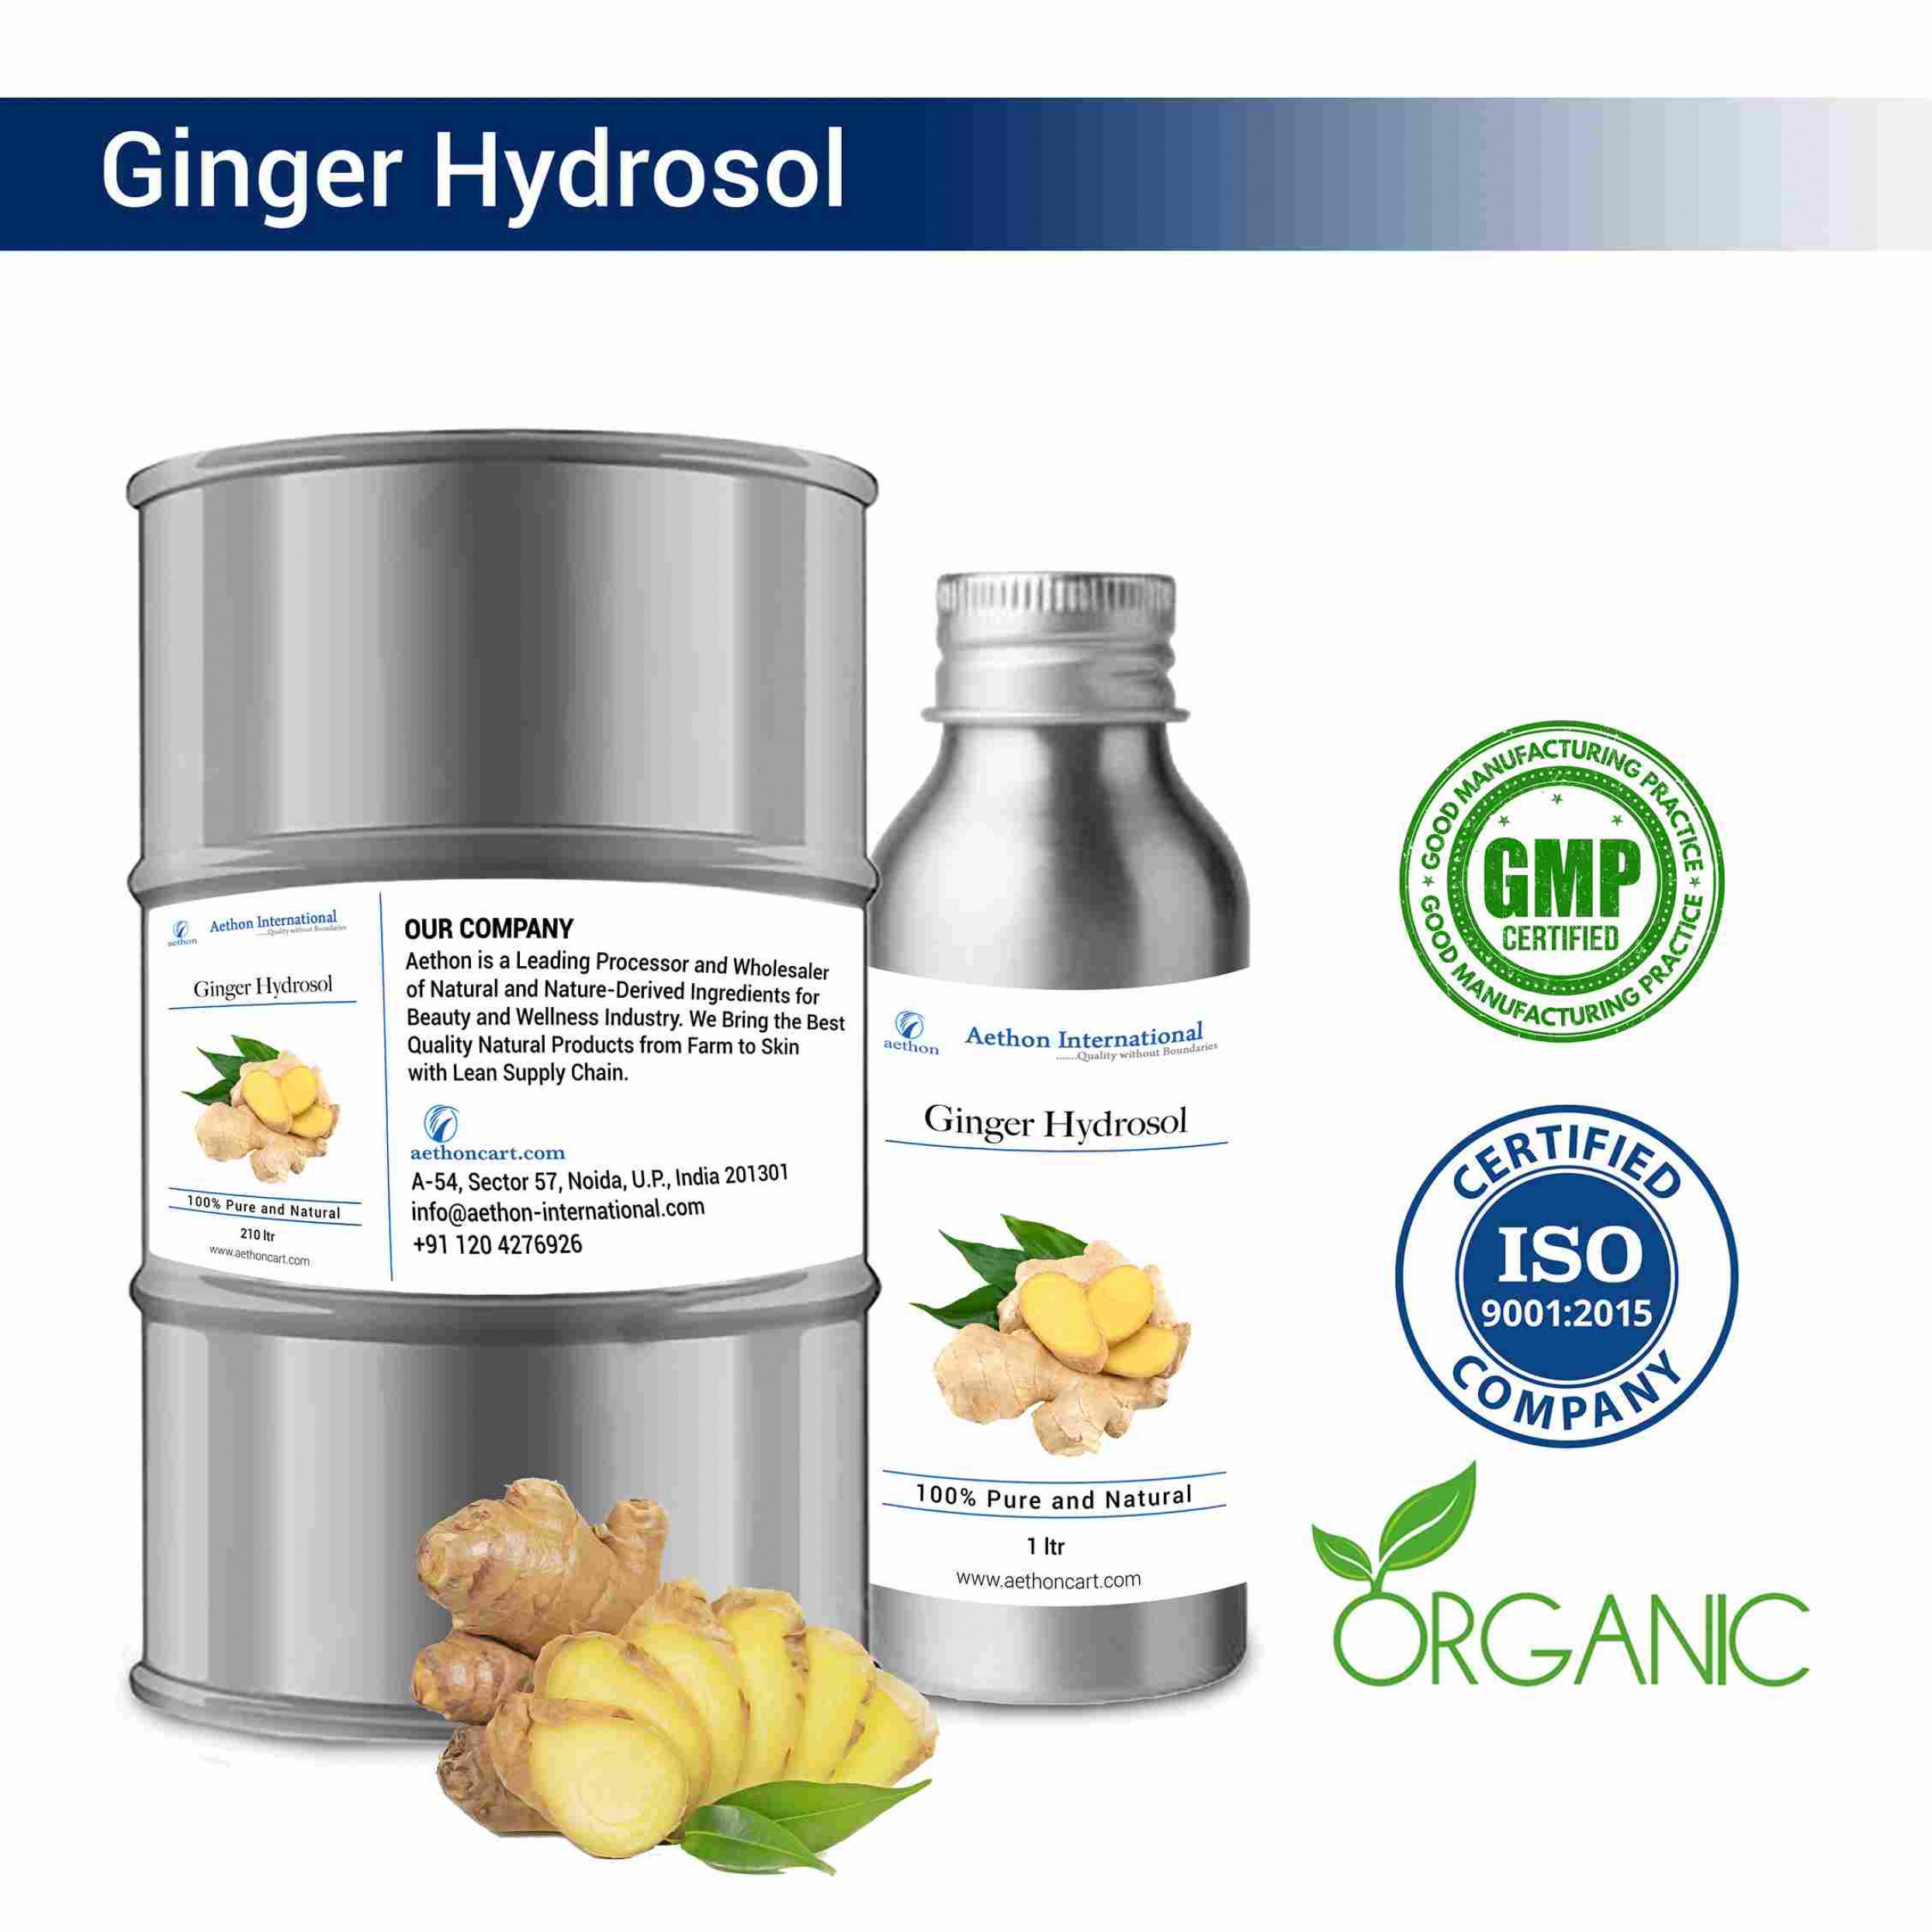 Ginger Hydrosol